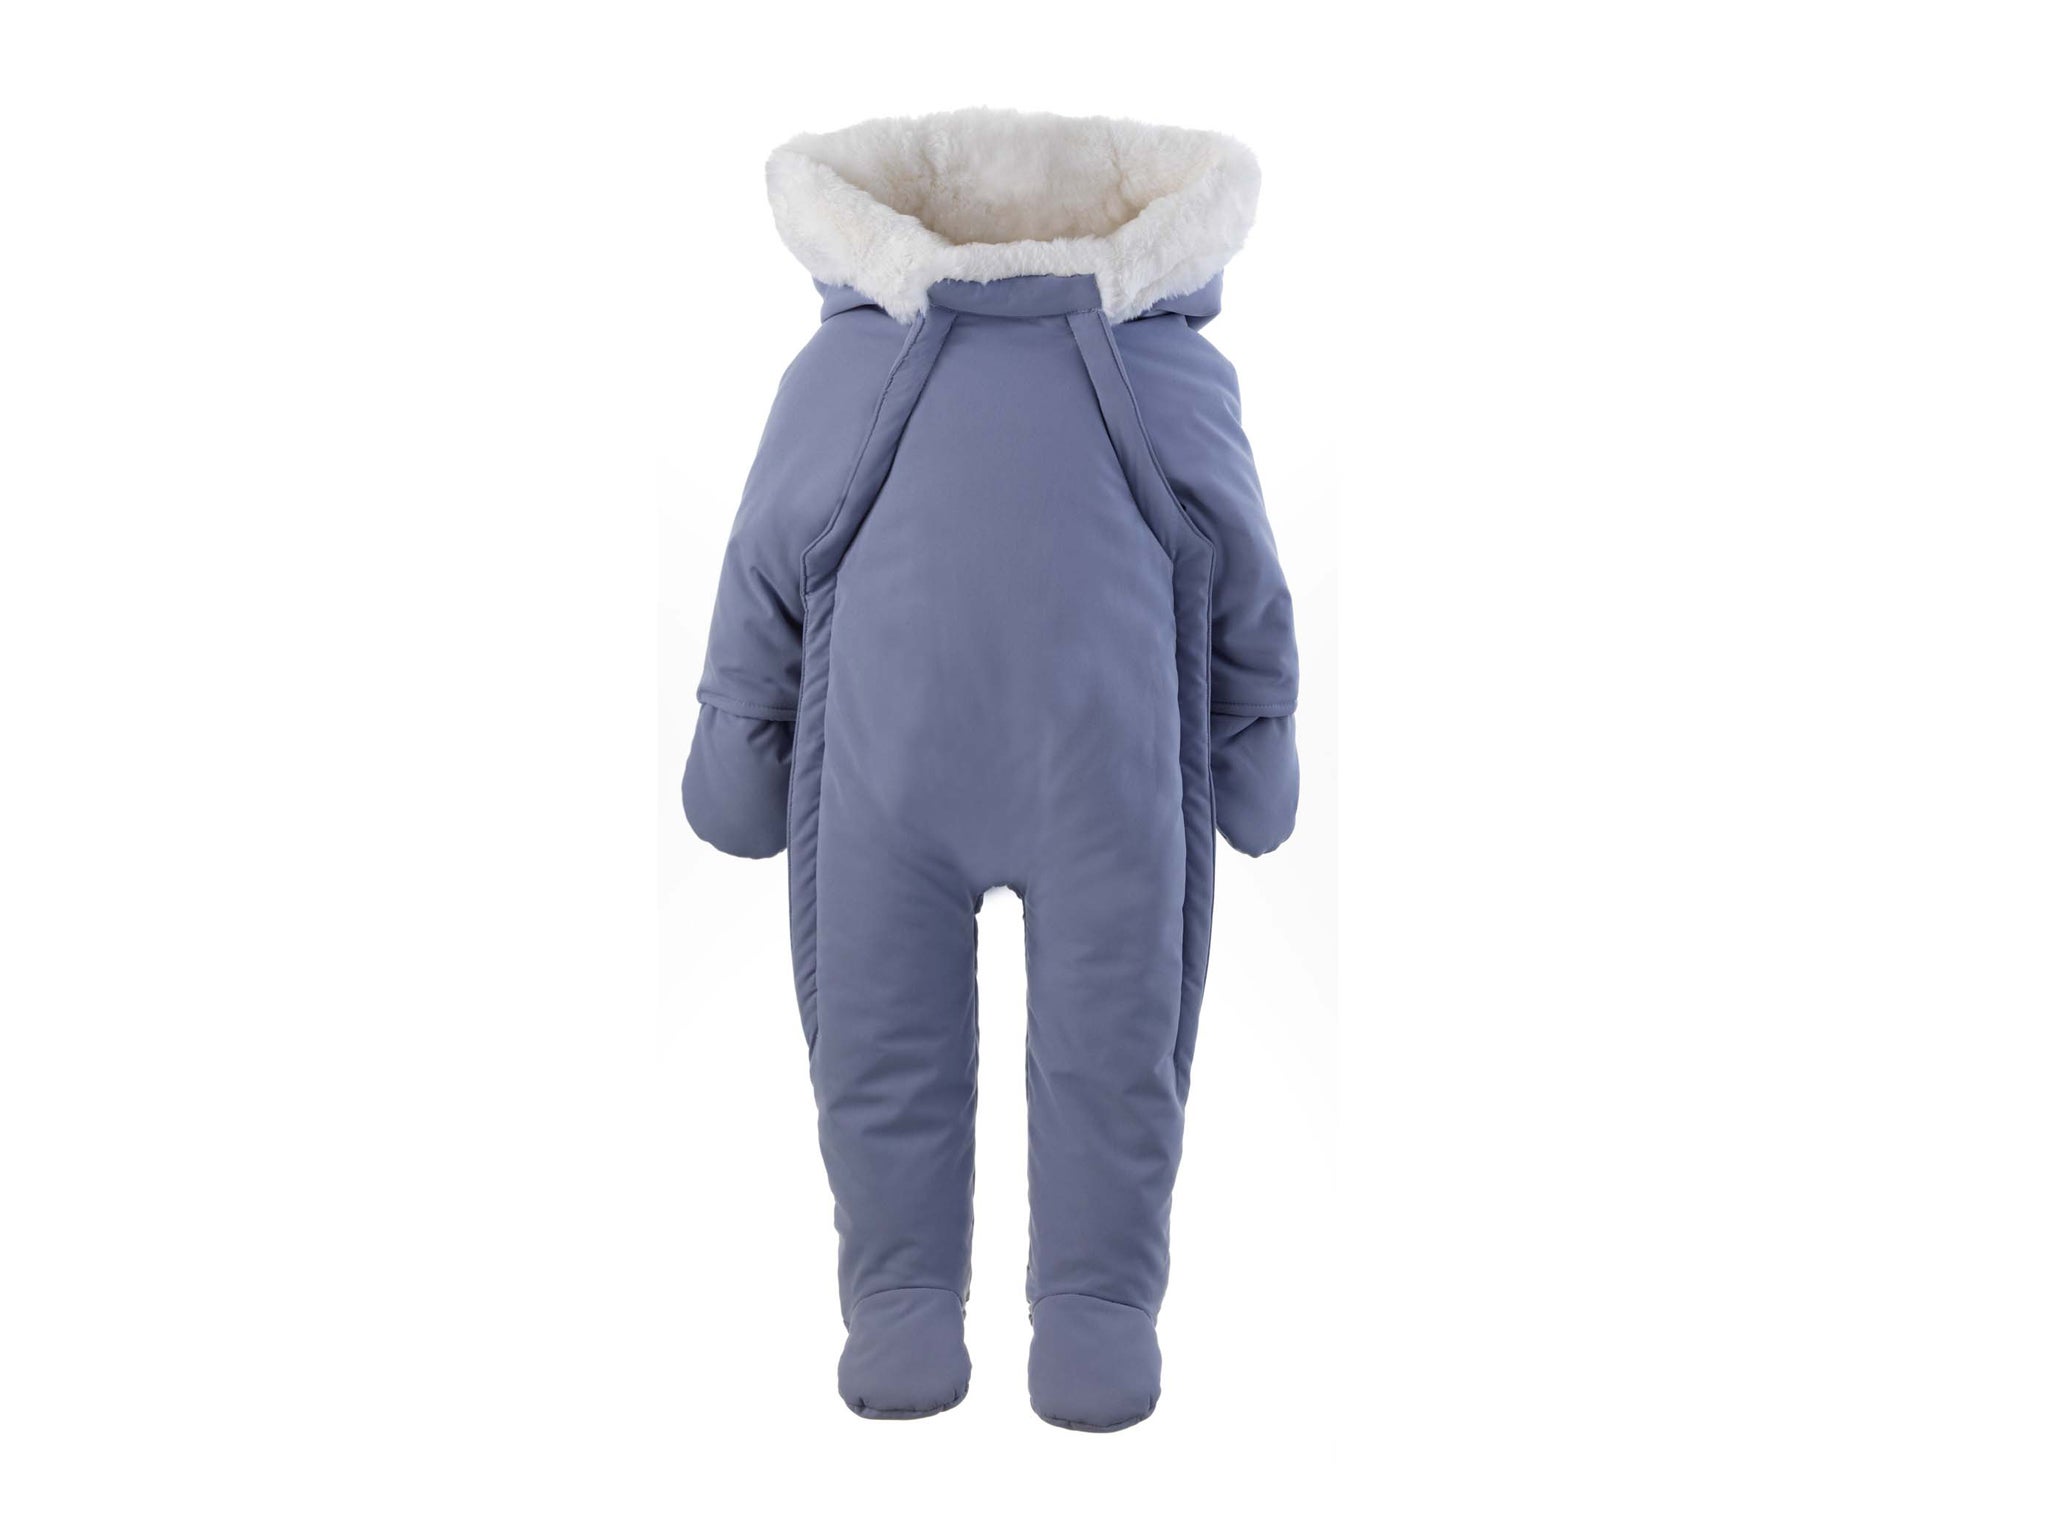 Jueshanzj Unisex Baby Snowsuit Warm Winter Hoodie Coat